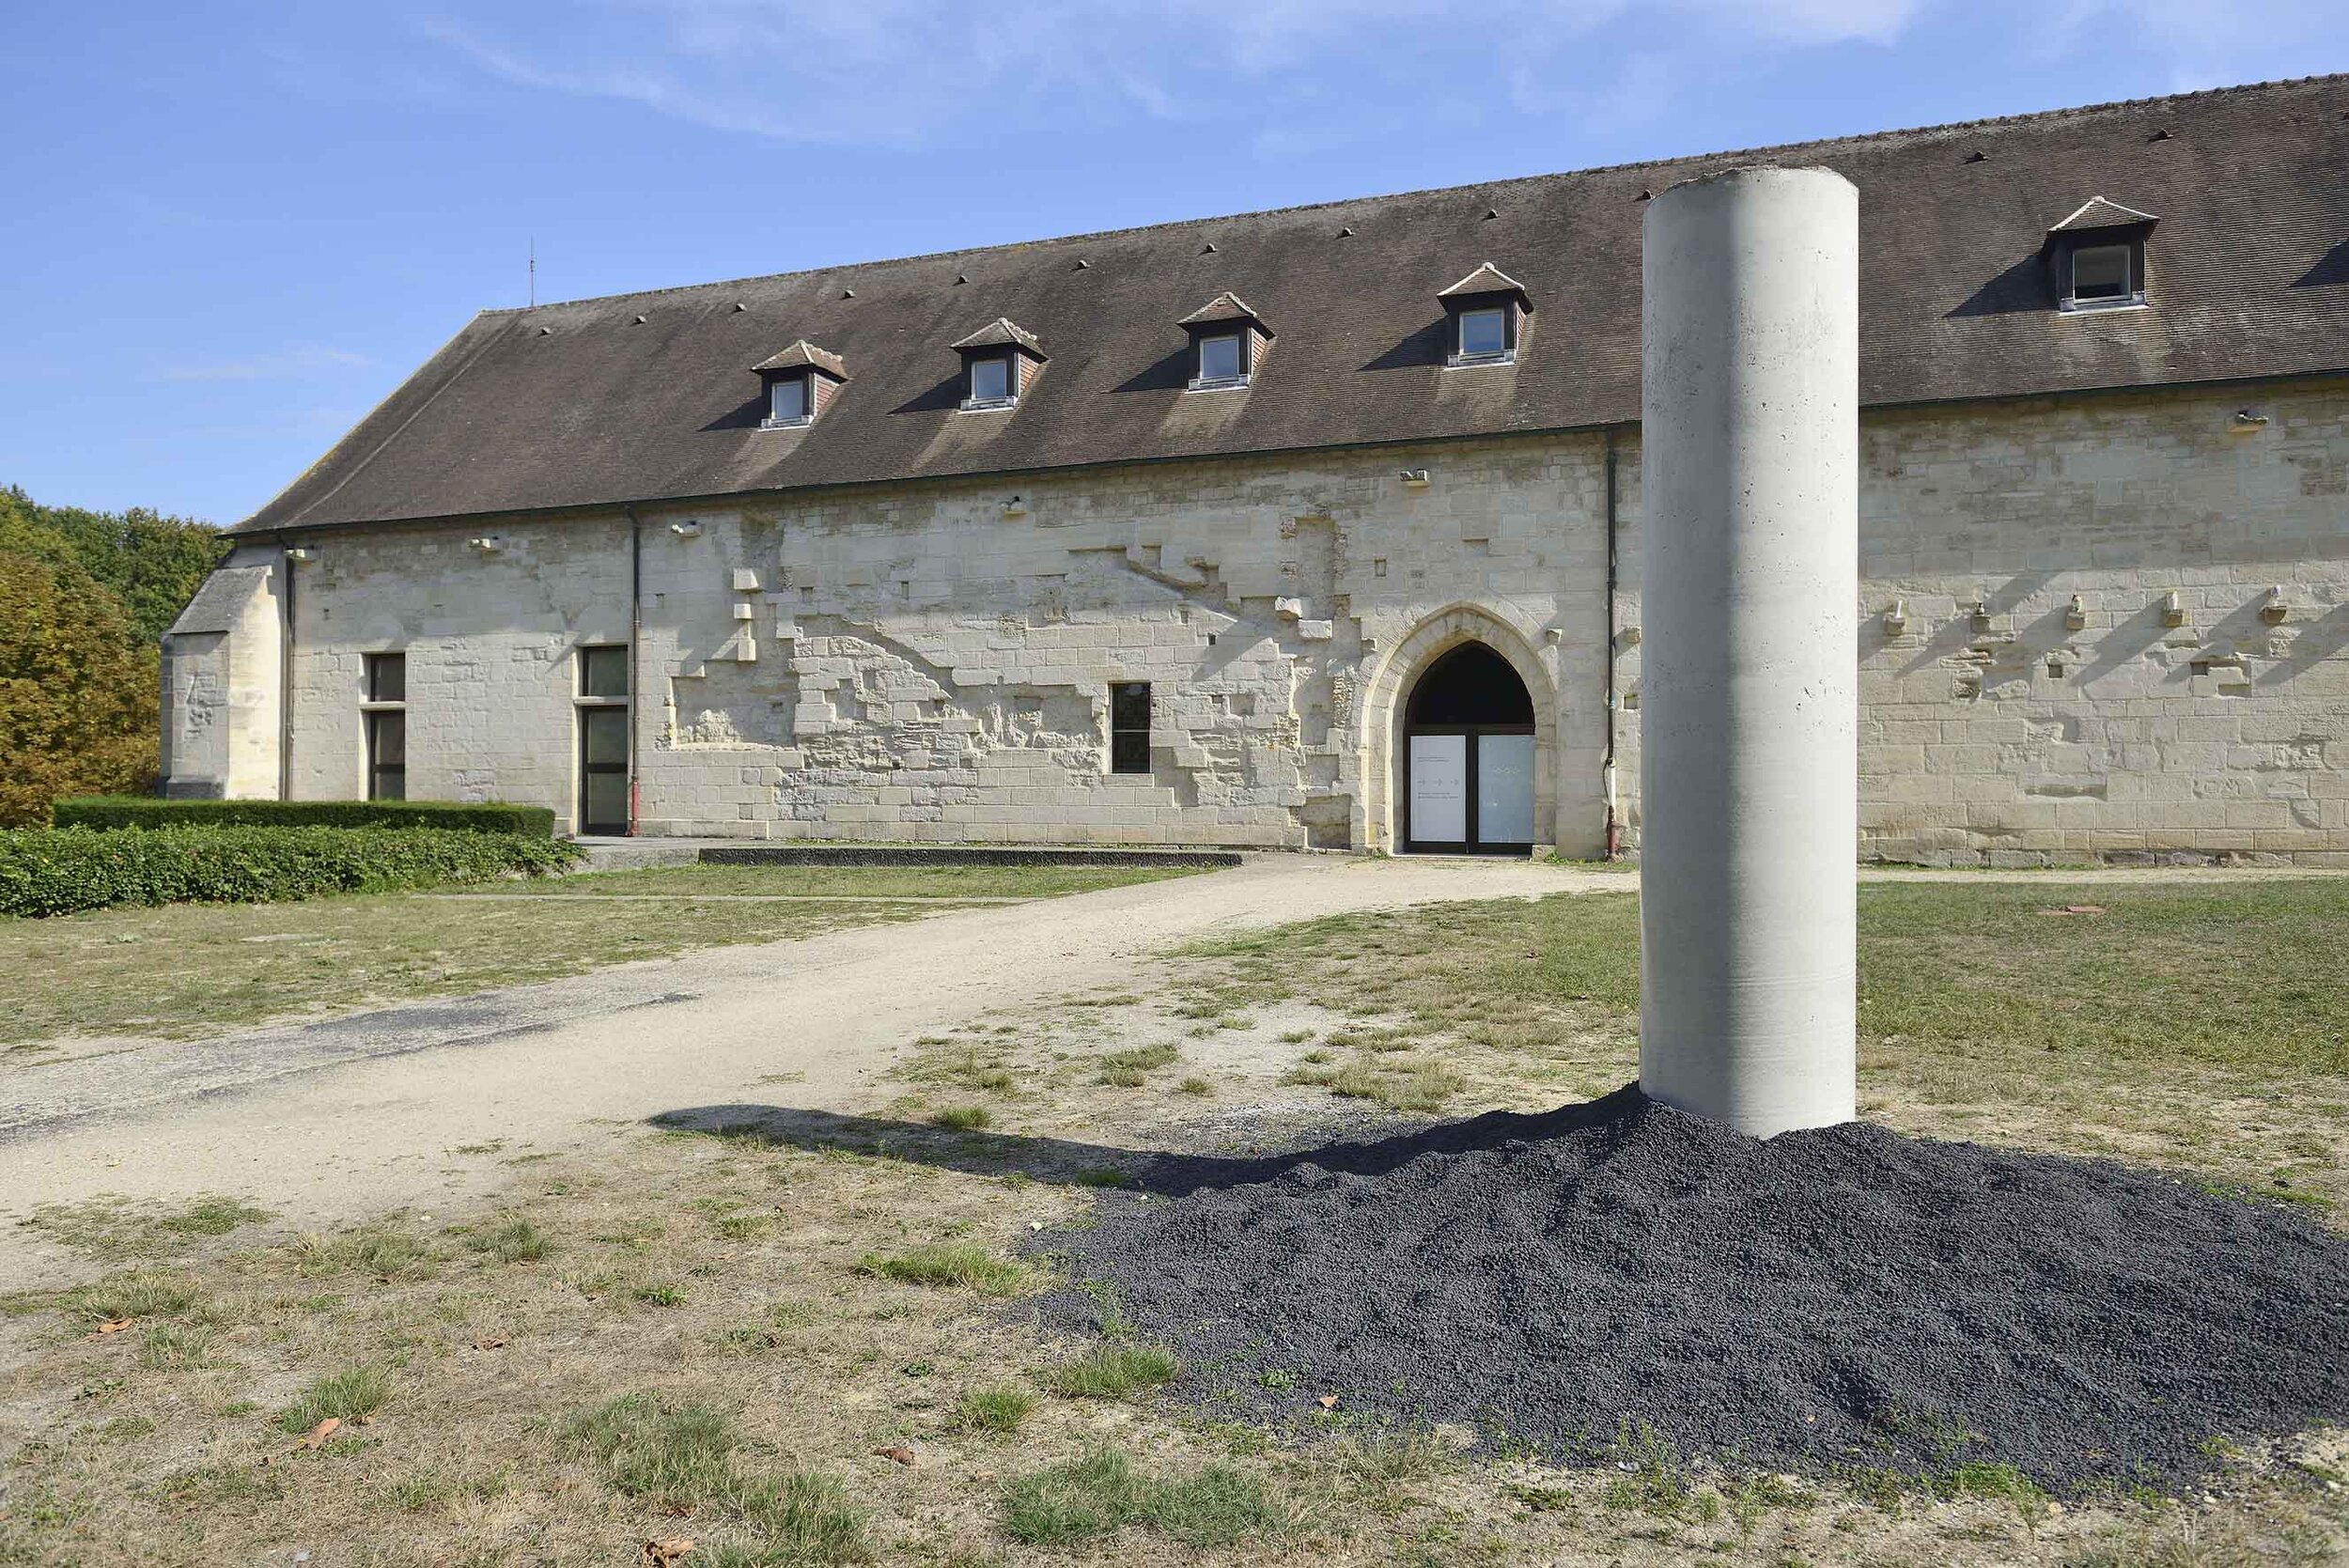 Geoscopia, Abbaye de Maubuisson, Saint-Ouen l’Aumône, 2020